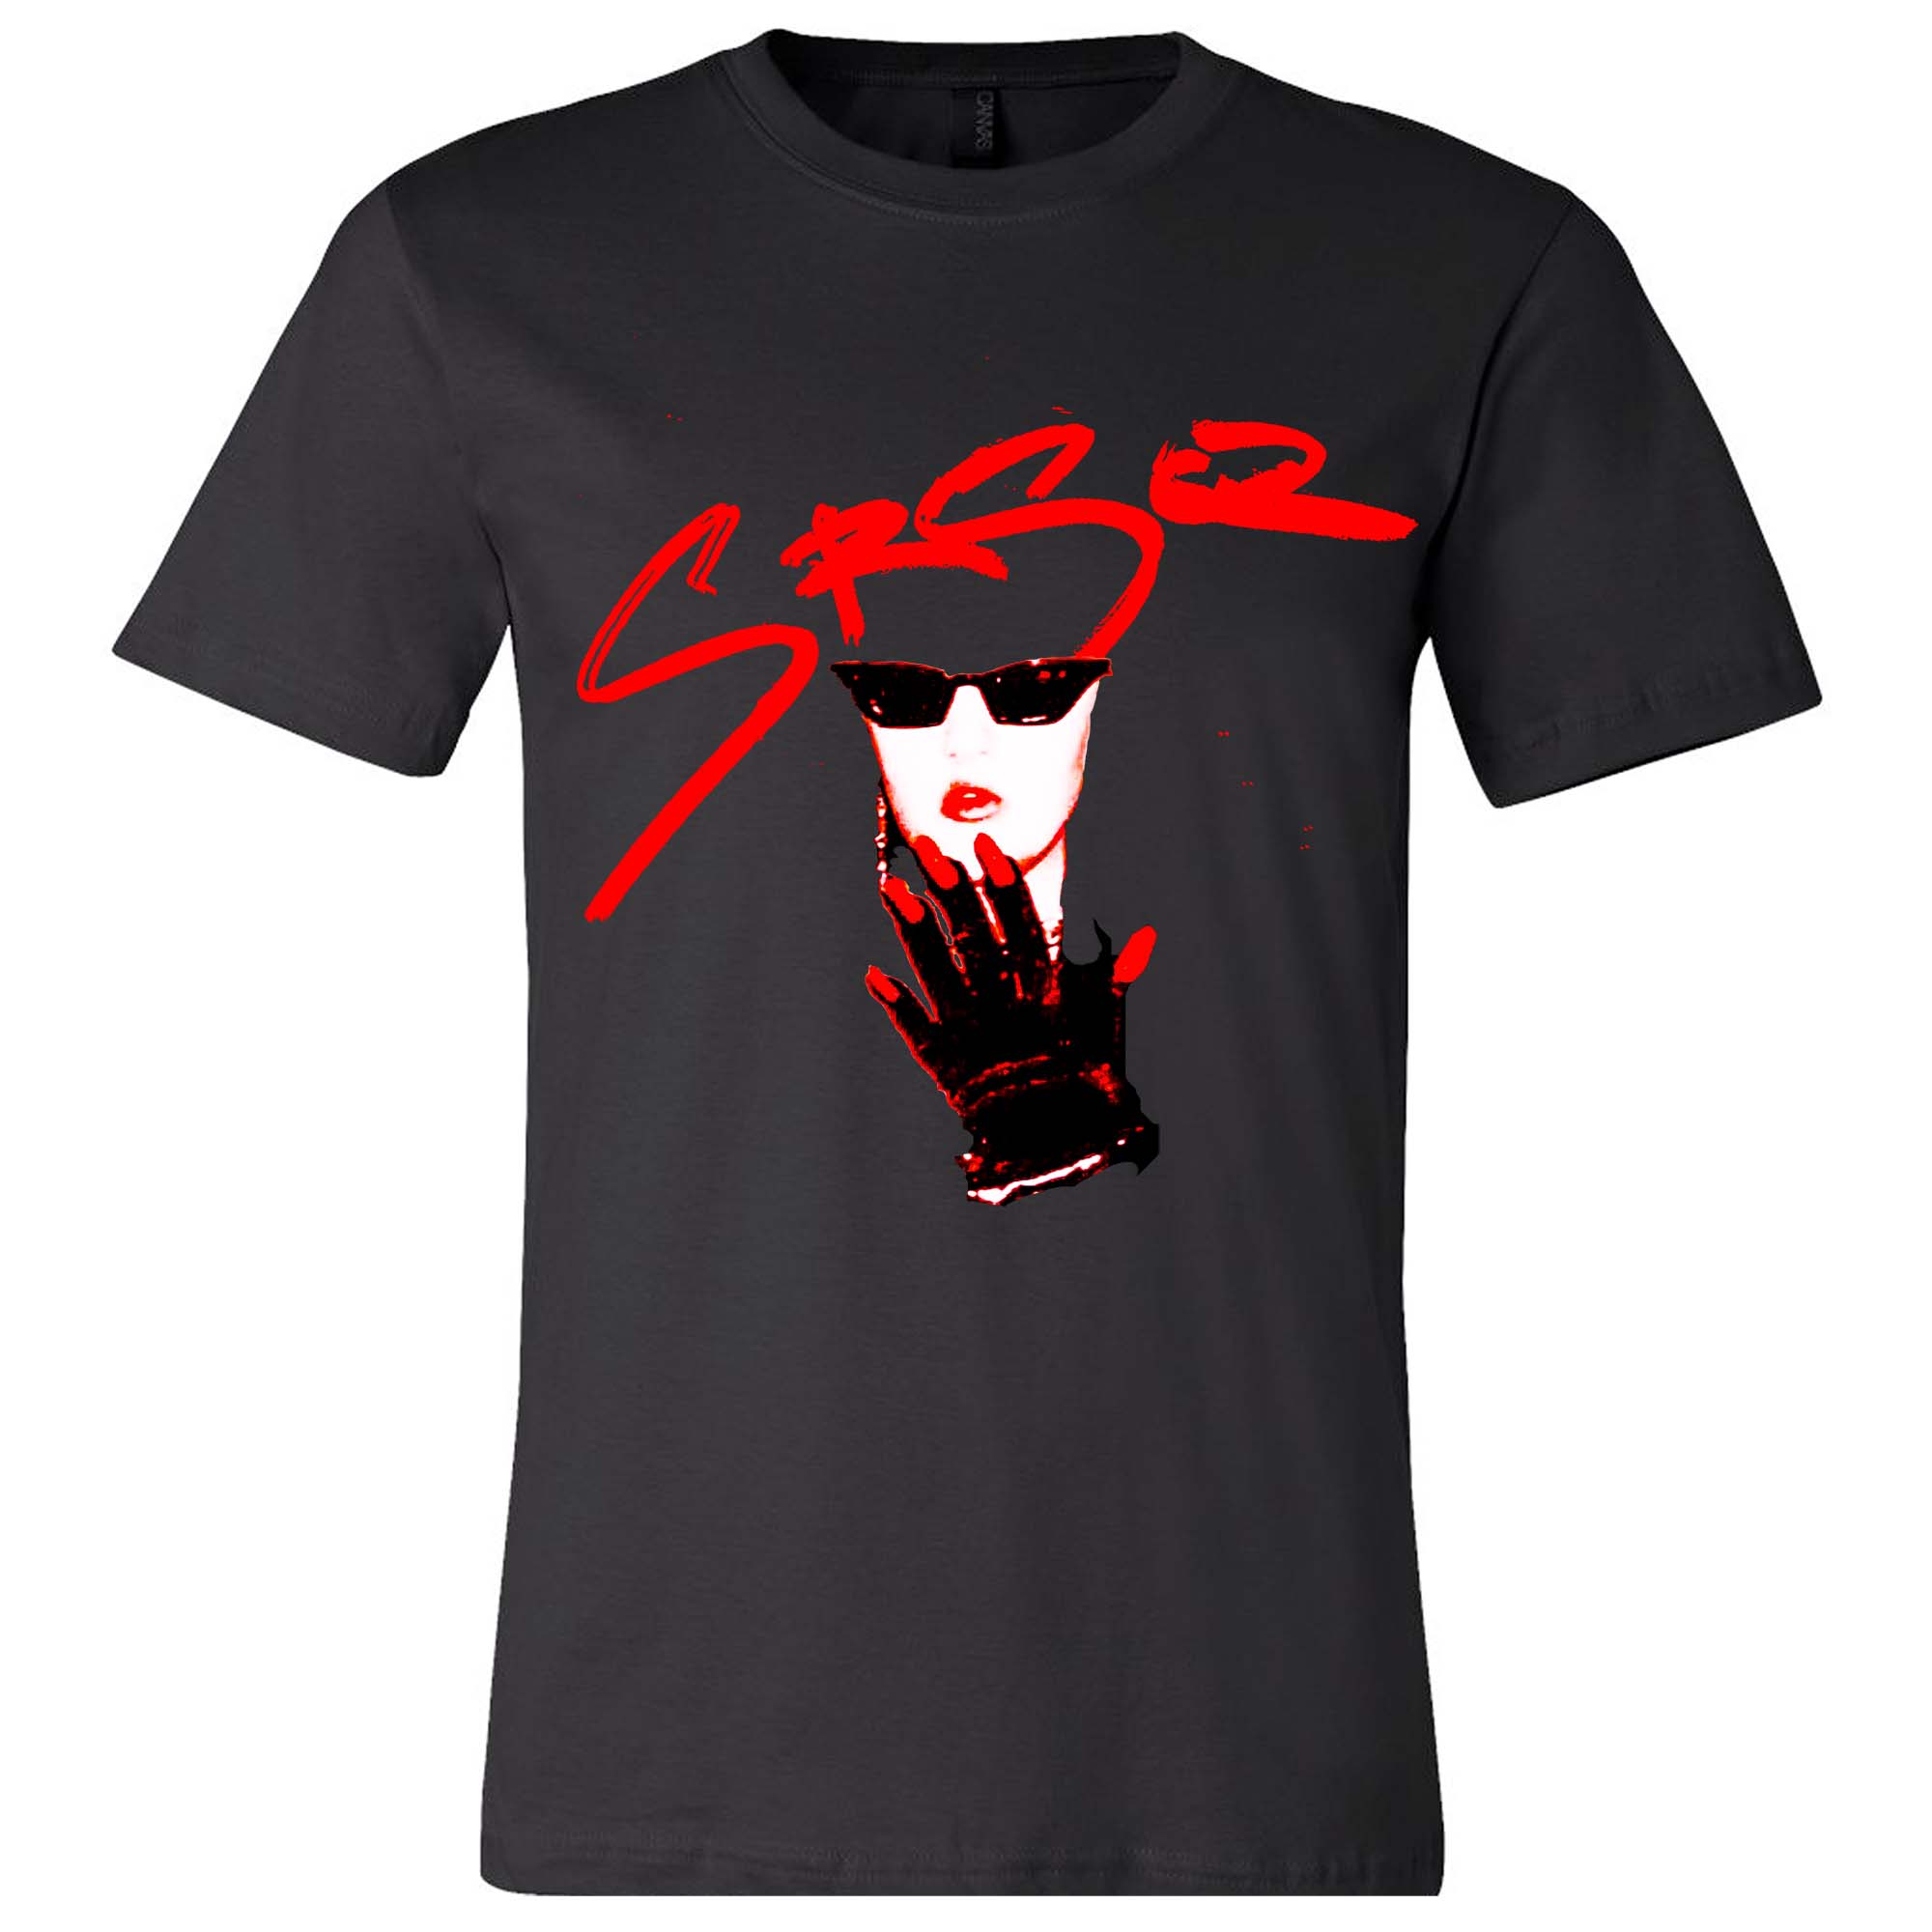 SRSQ - "Lipstick" Shortsleeve T-Shirt